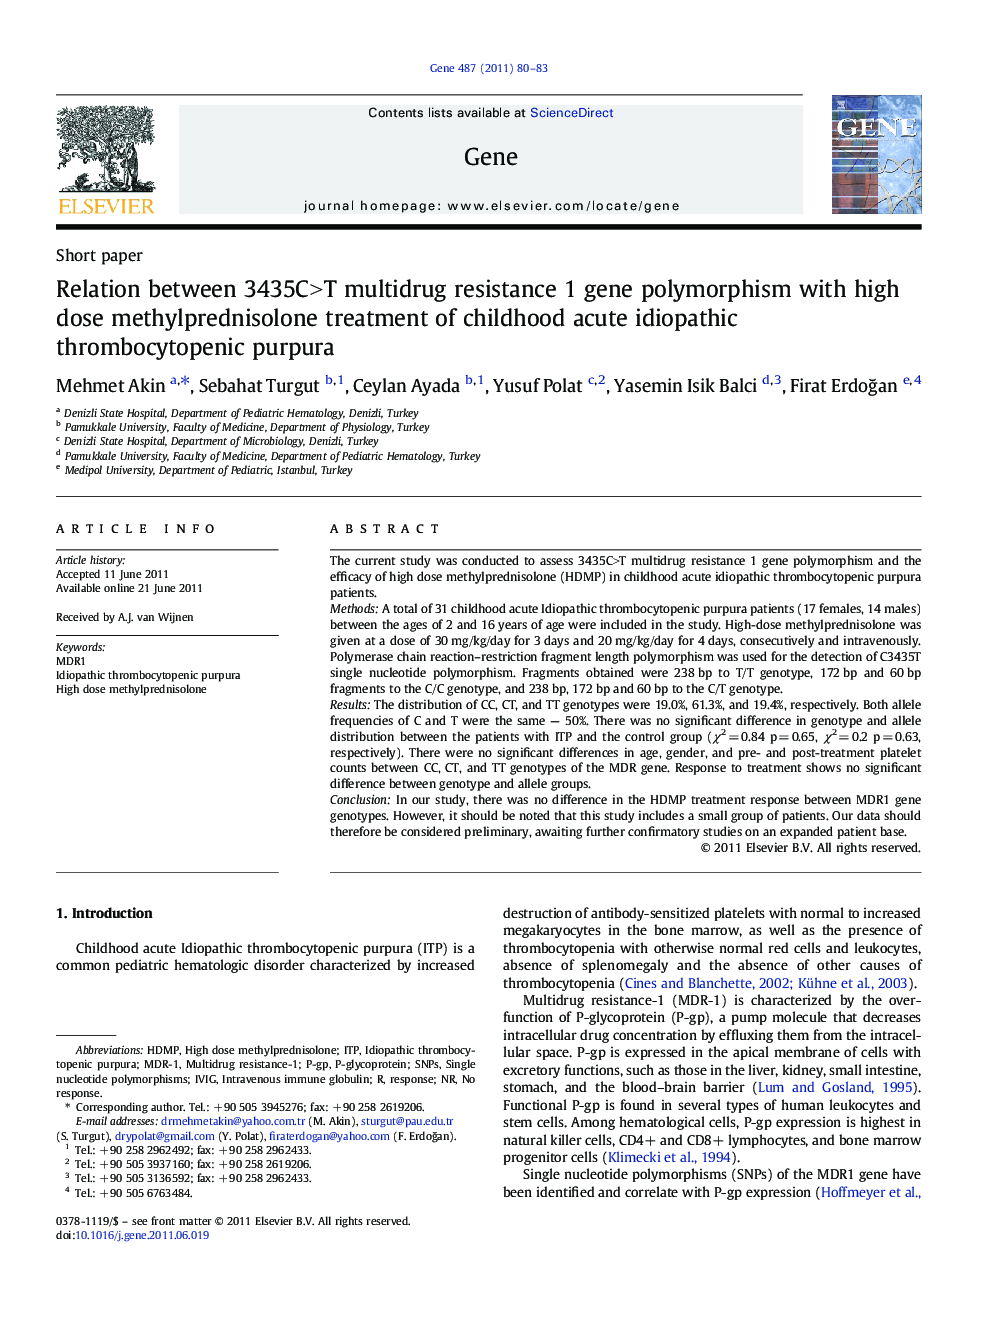 Relation between 3435C>T multidrug resistance 1 gene polymorphism with high dose methylprednisolone treatment of childhood acute idiopathic thrombocytopenic purpura